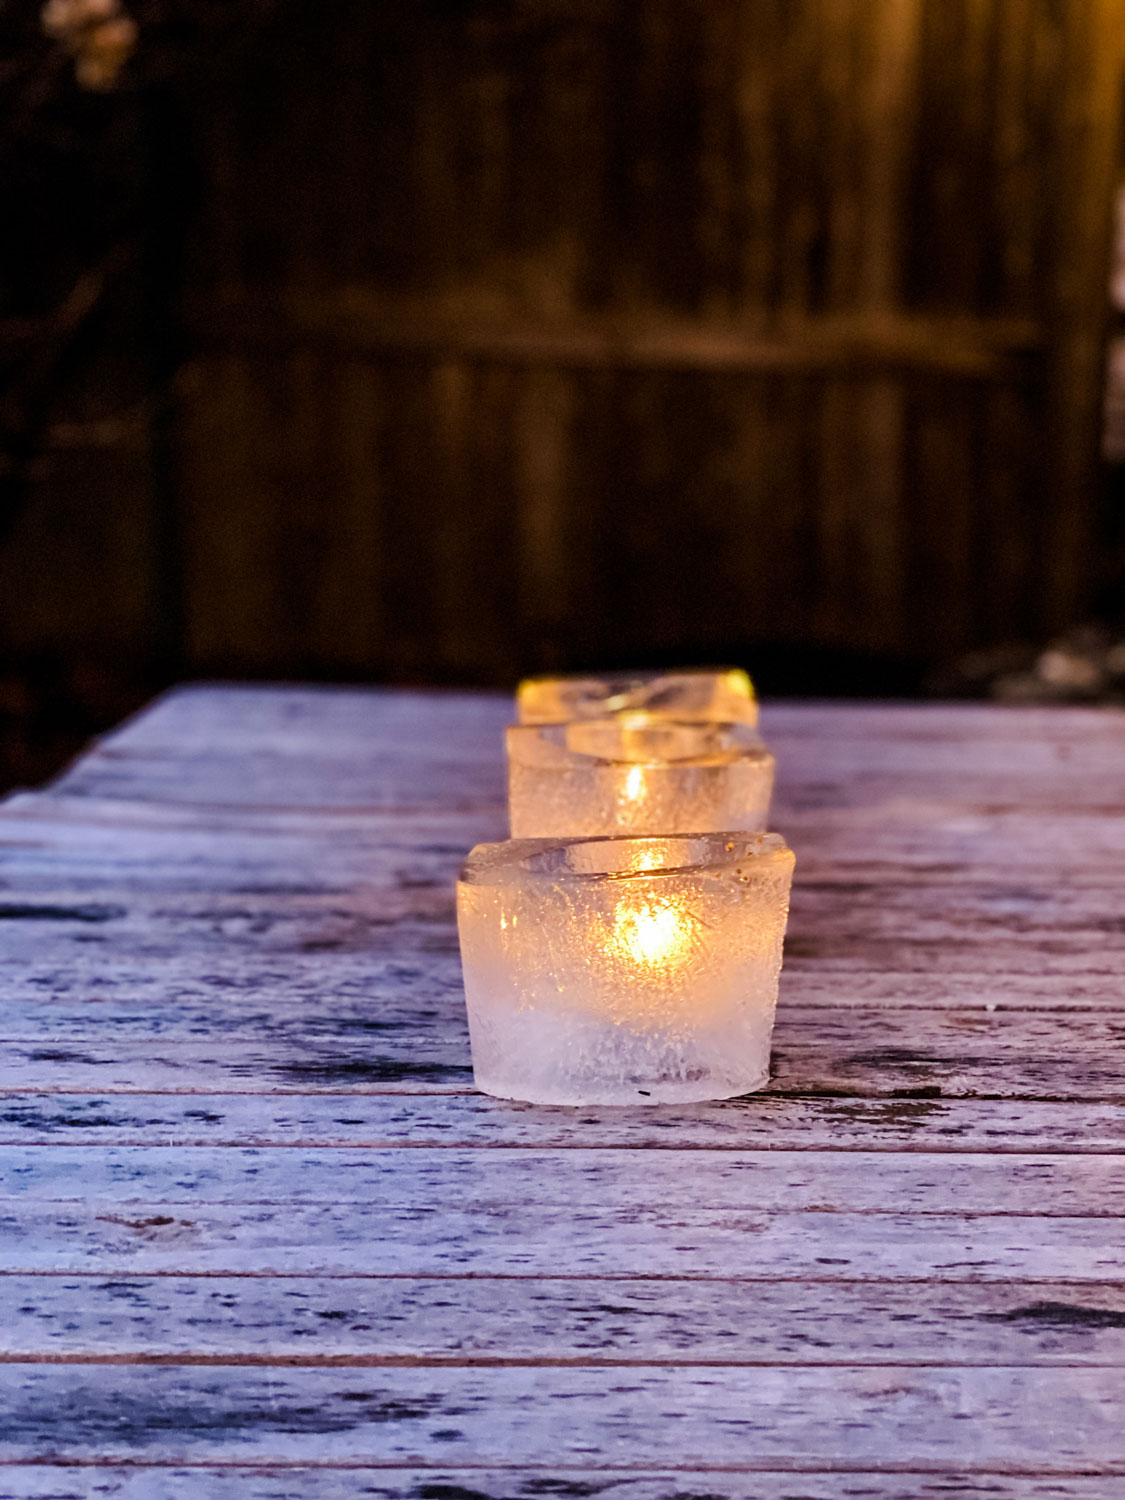 https://mostlovelythings.com/wp-content/uploads/2022/01/ice-lanterns-candles-night.jpg